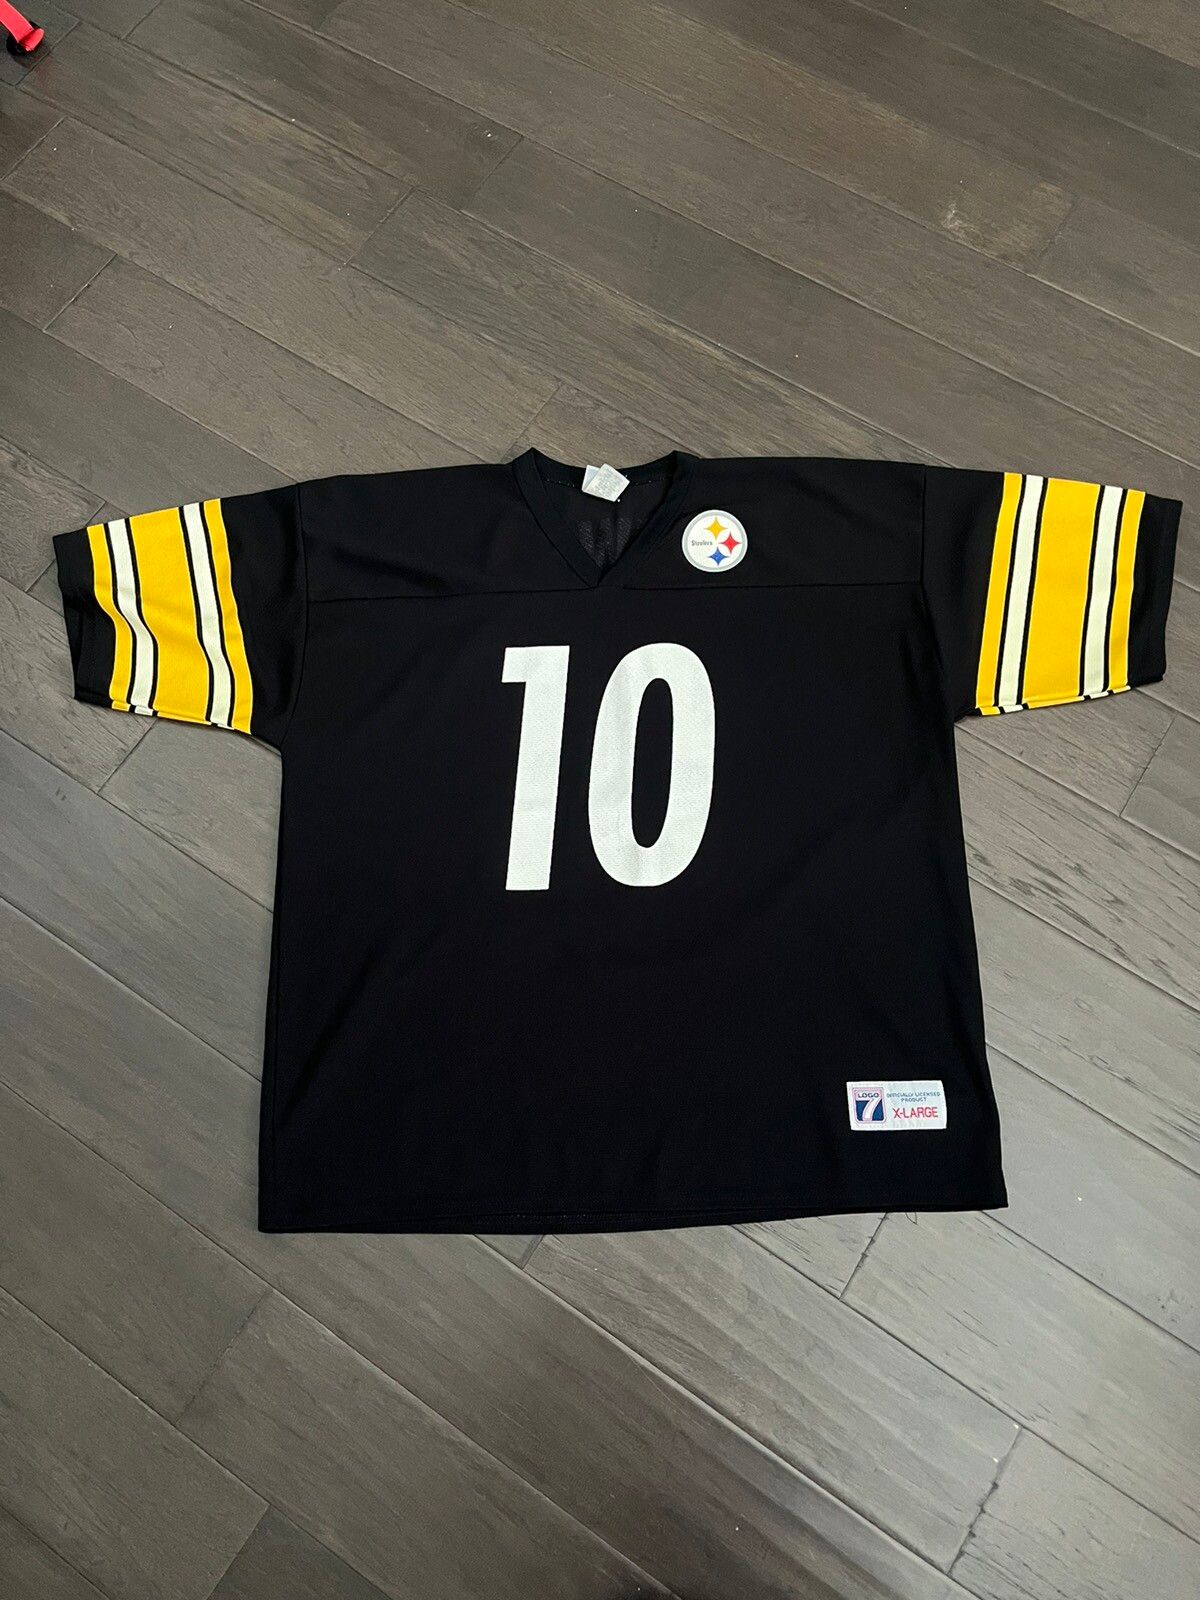 Vintage Vintage Kordell Stewart Pittsburgh Steelers jersey Logo 7 Size US XL / EU 56 / 4 - 1 Preview